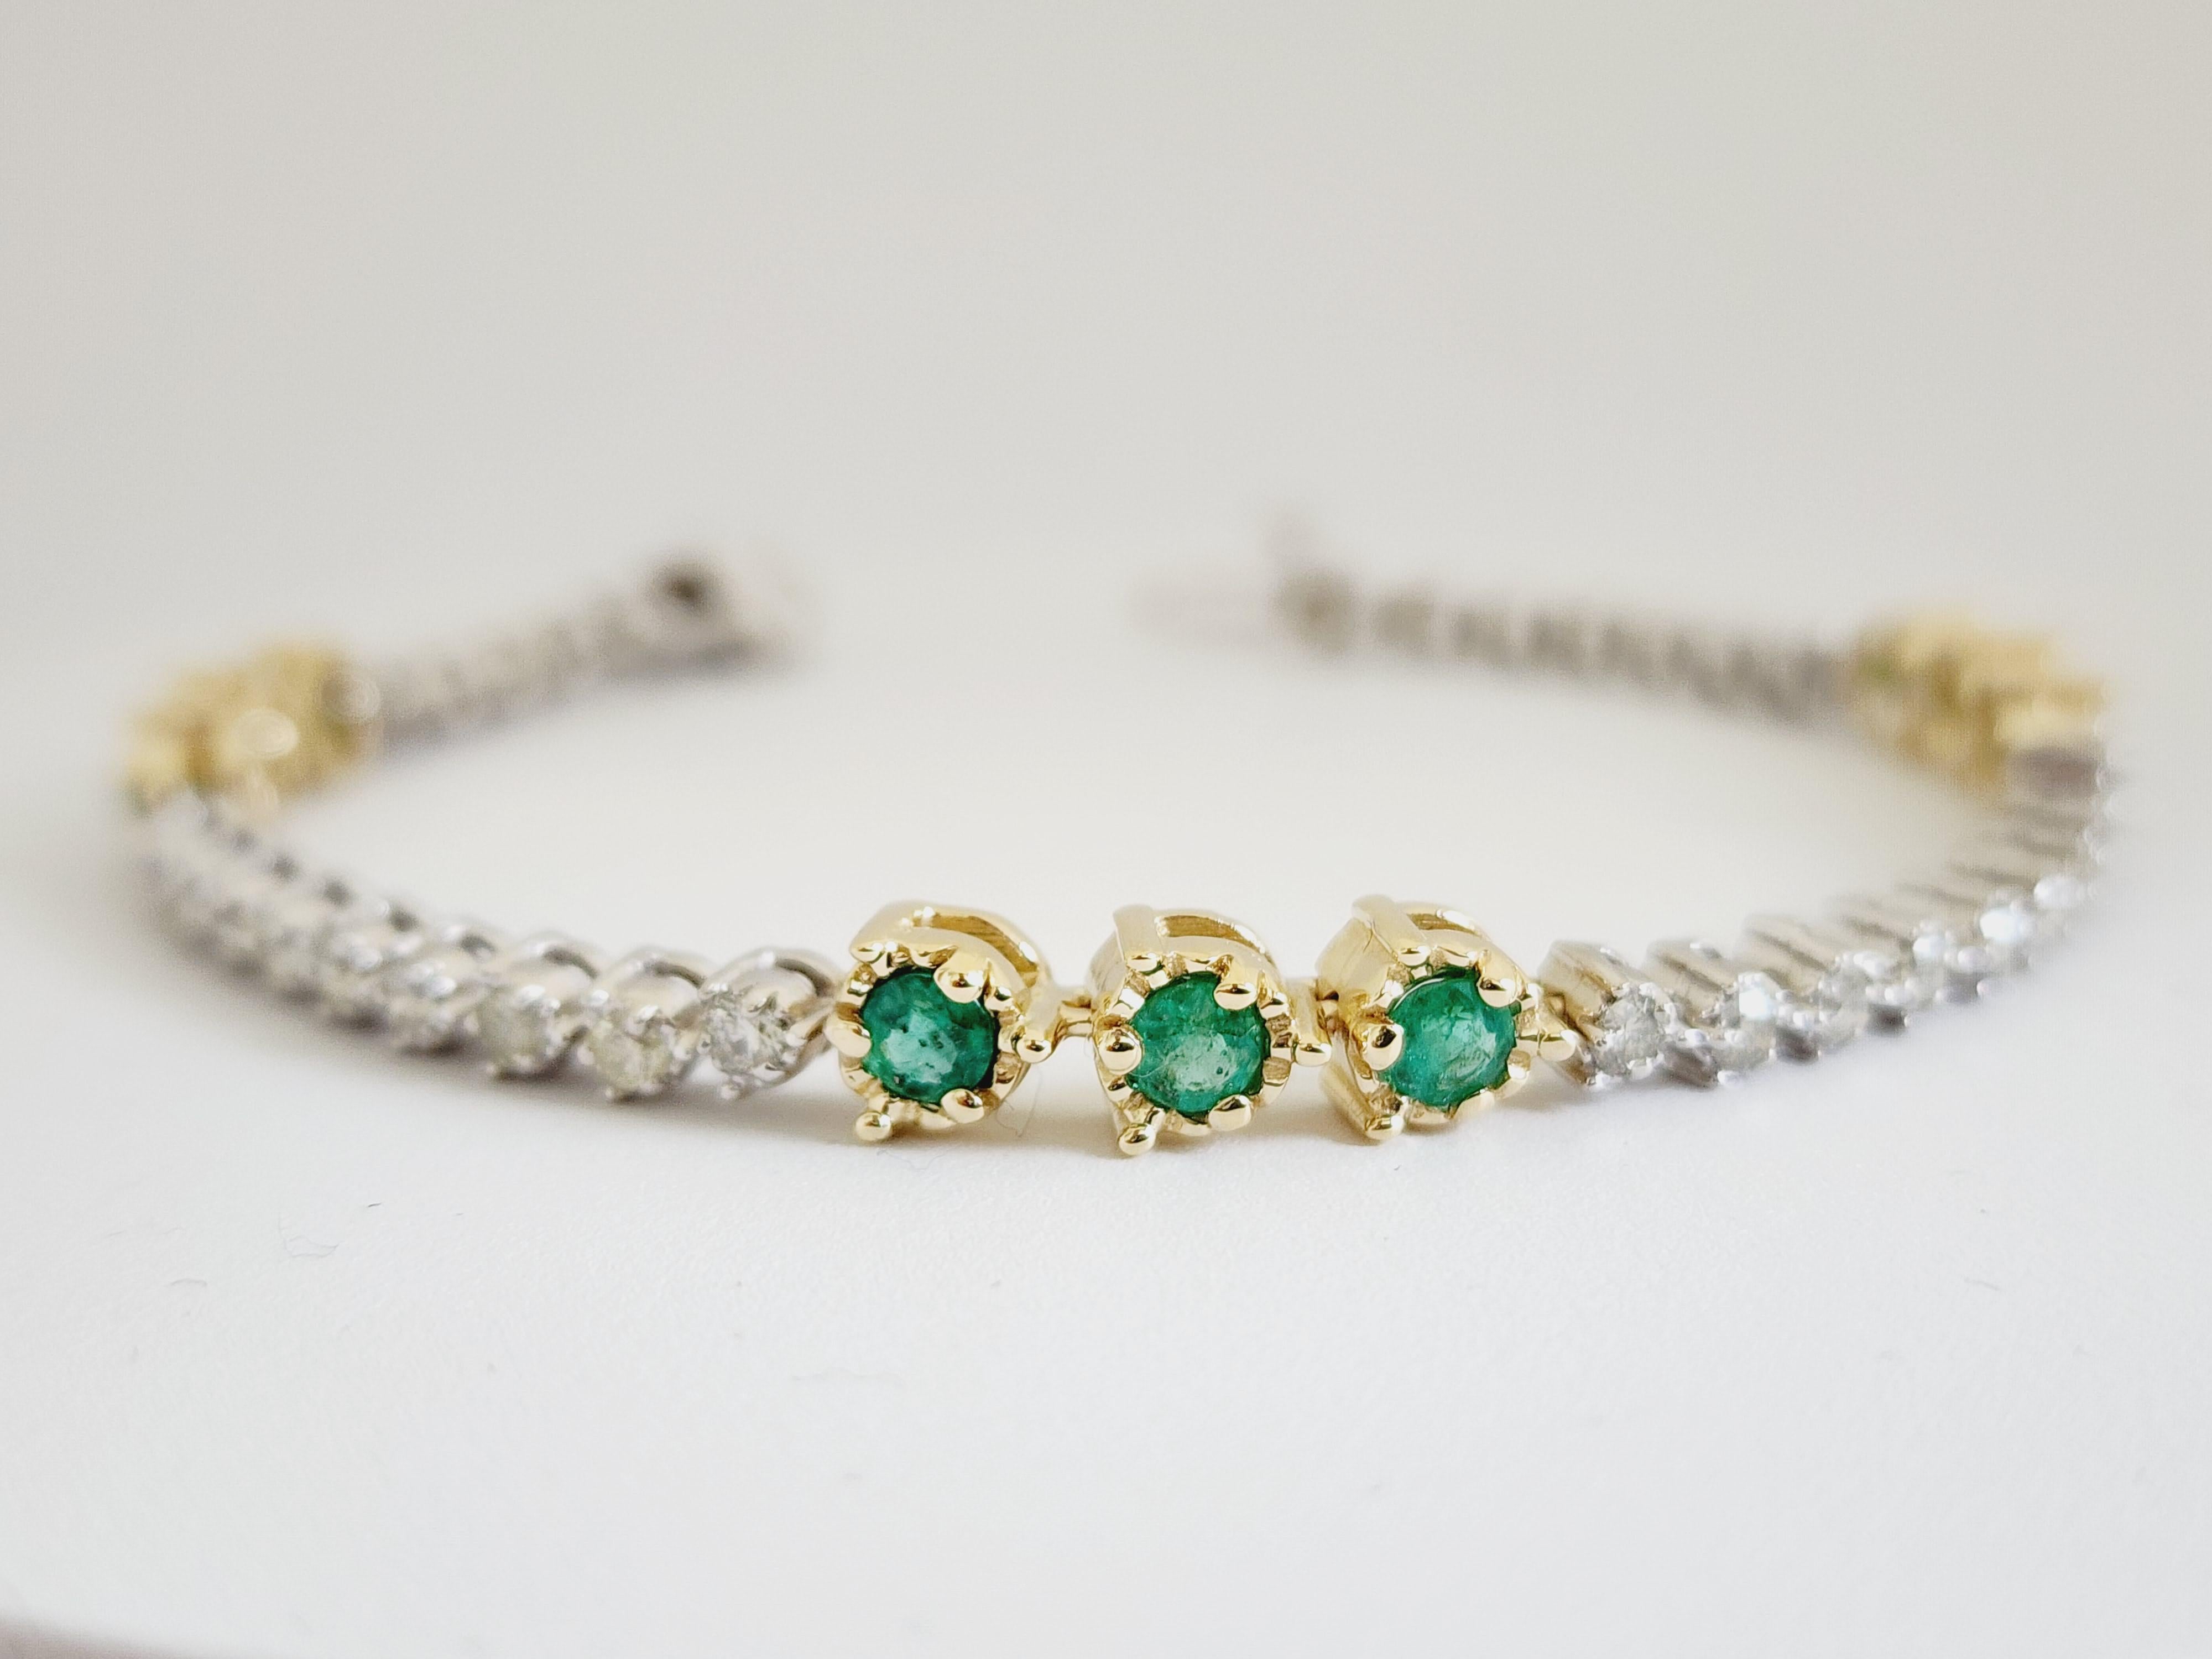 Emerald Diamond Tennis Bracelet 14 Karat Two Tone Gold 7 inch
1.45 cts Natural Emeralds
1.65 cts Natural Diamonds